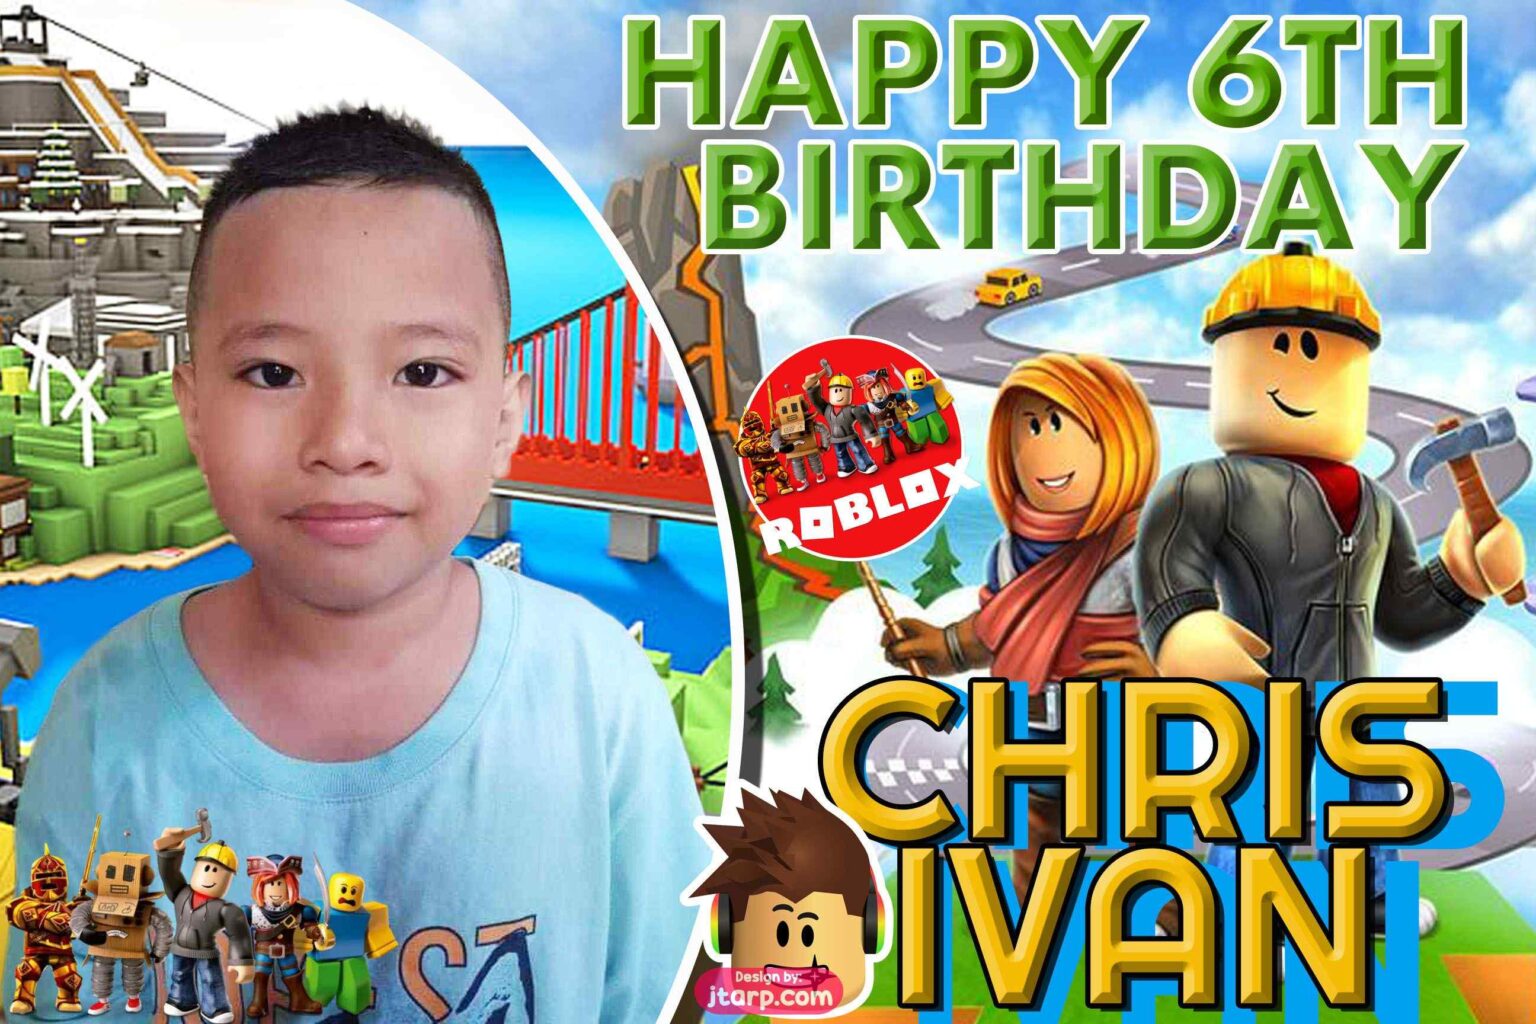 2x3 Happy 6th Birthday Chris Ivan Roblox Theme Tarp Design